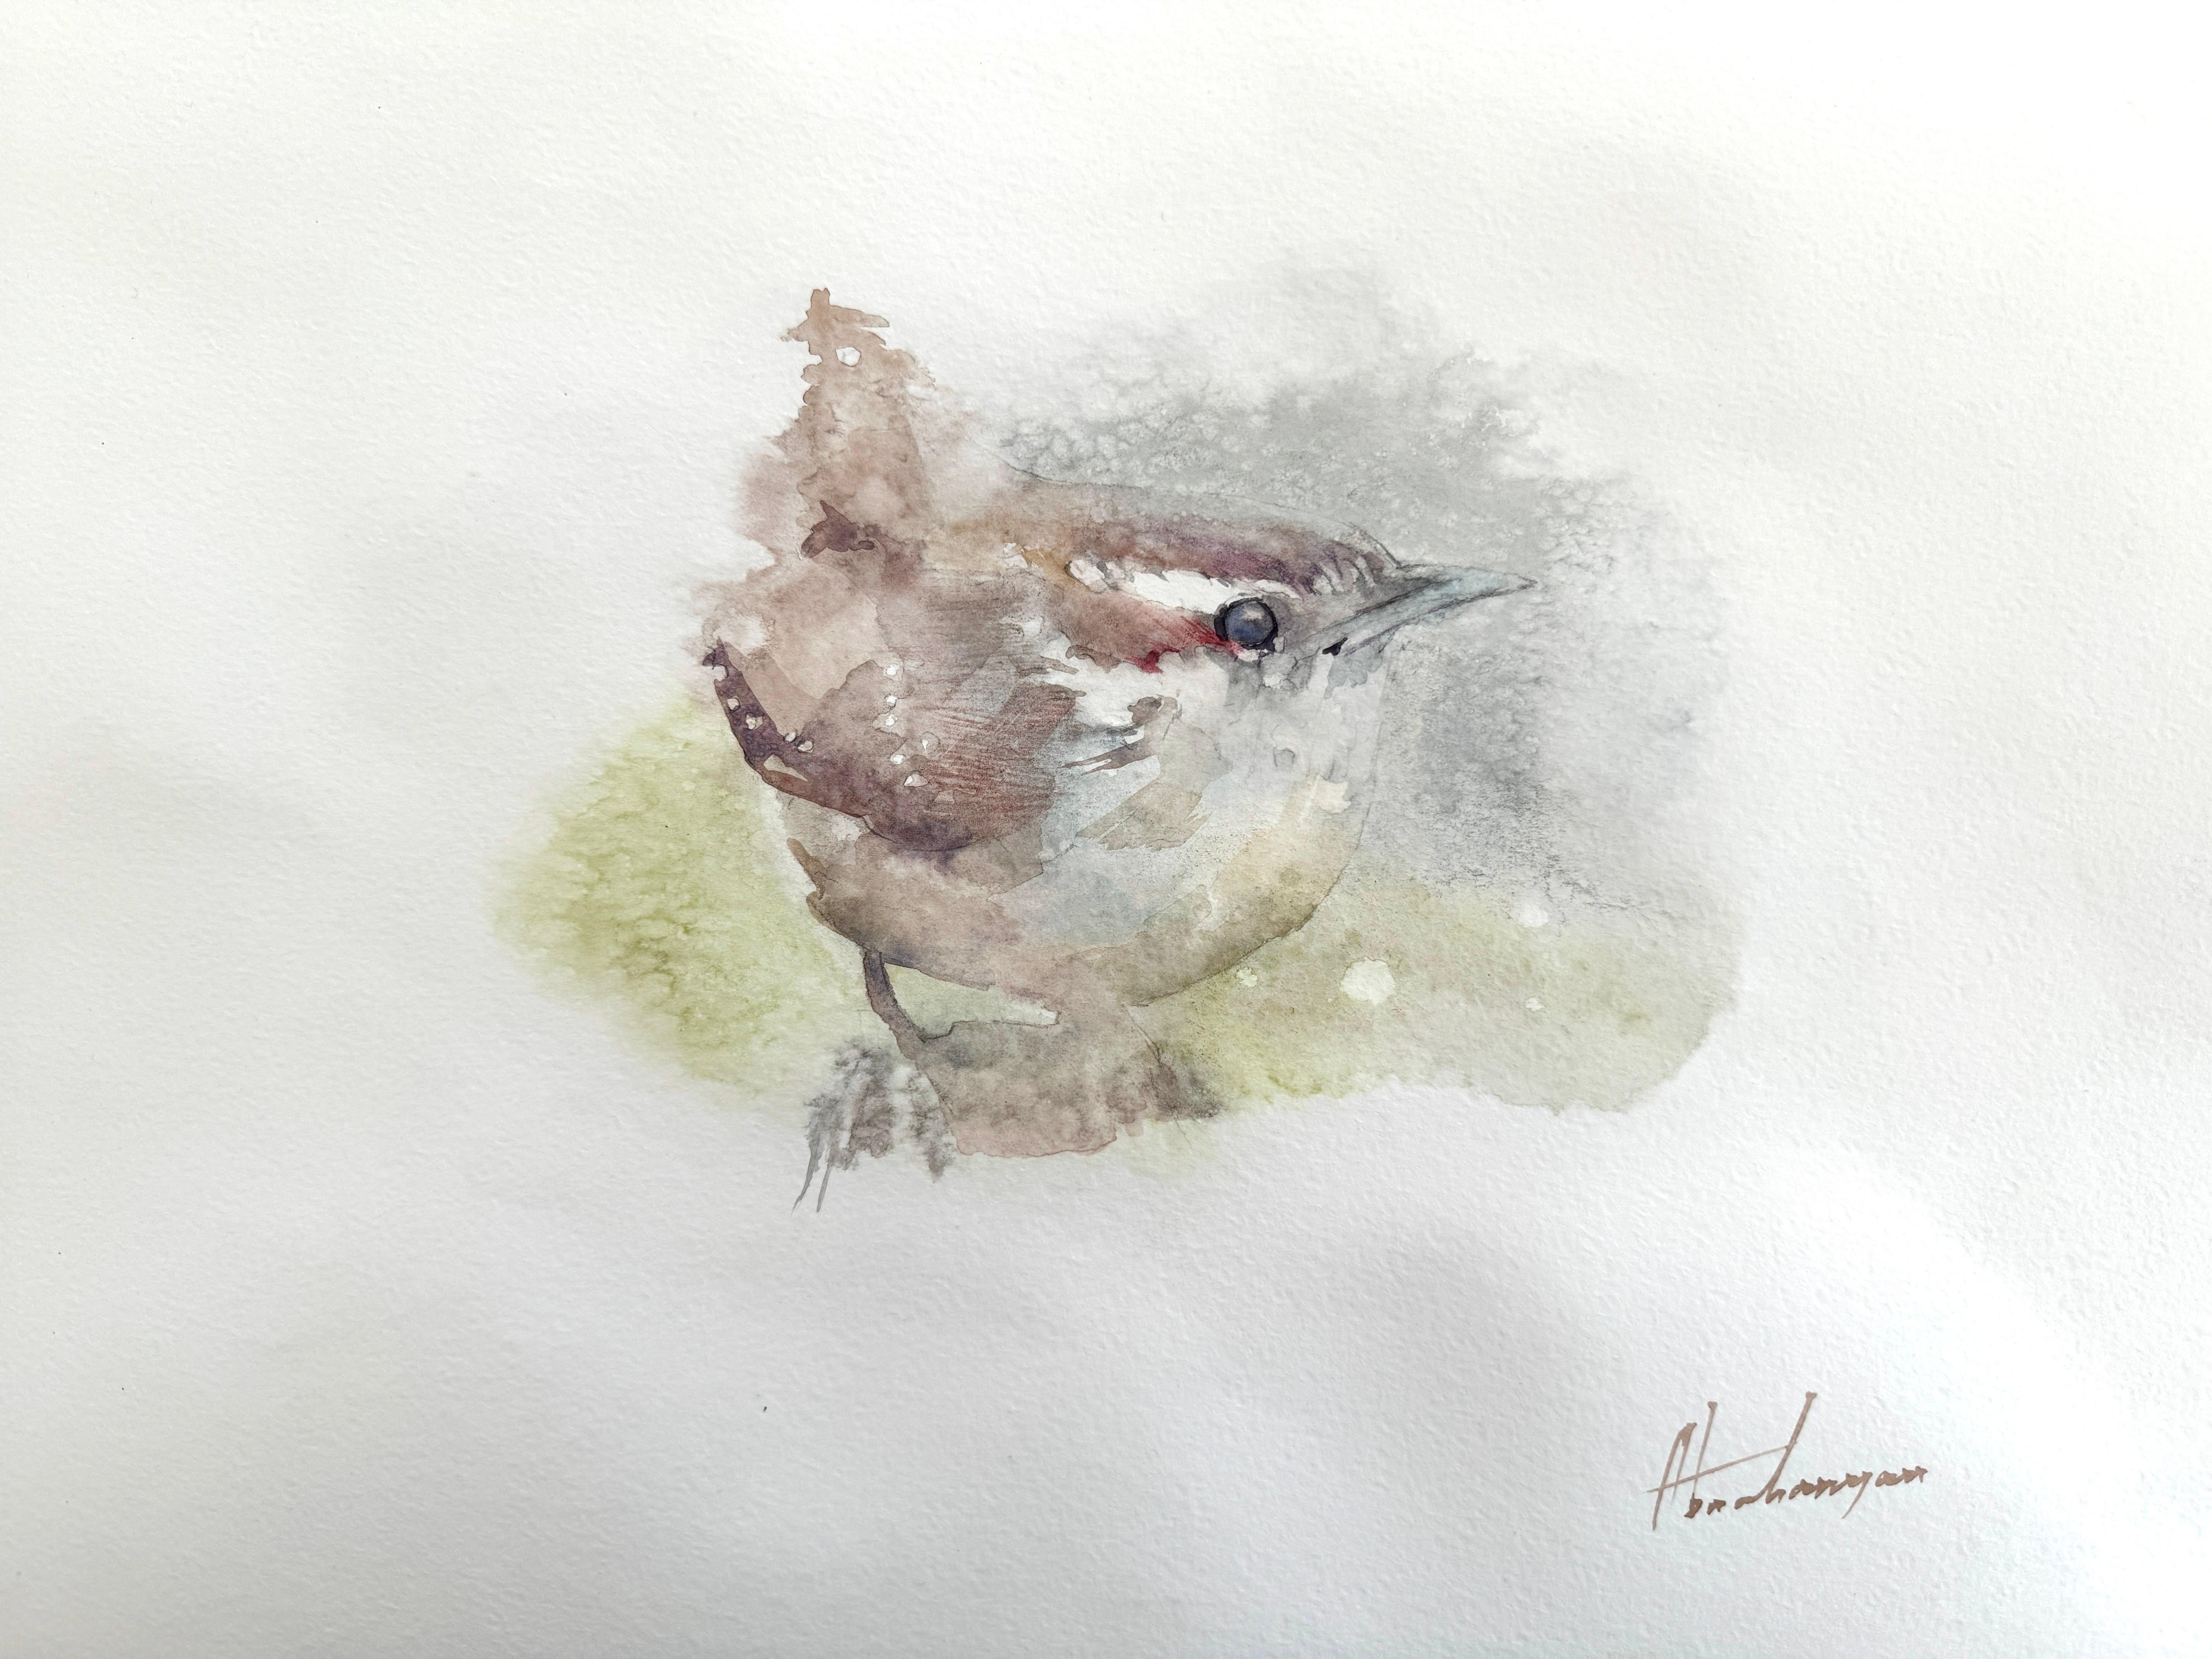 Artyom Abrahamyan Animal Art - Wren, Bird, Watercolor Handmade Painting, One of a Kind